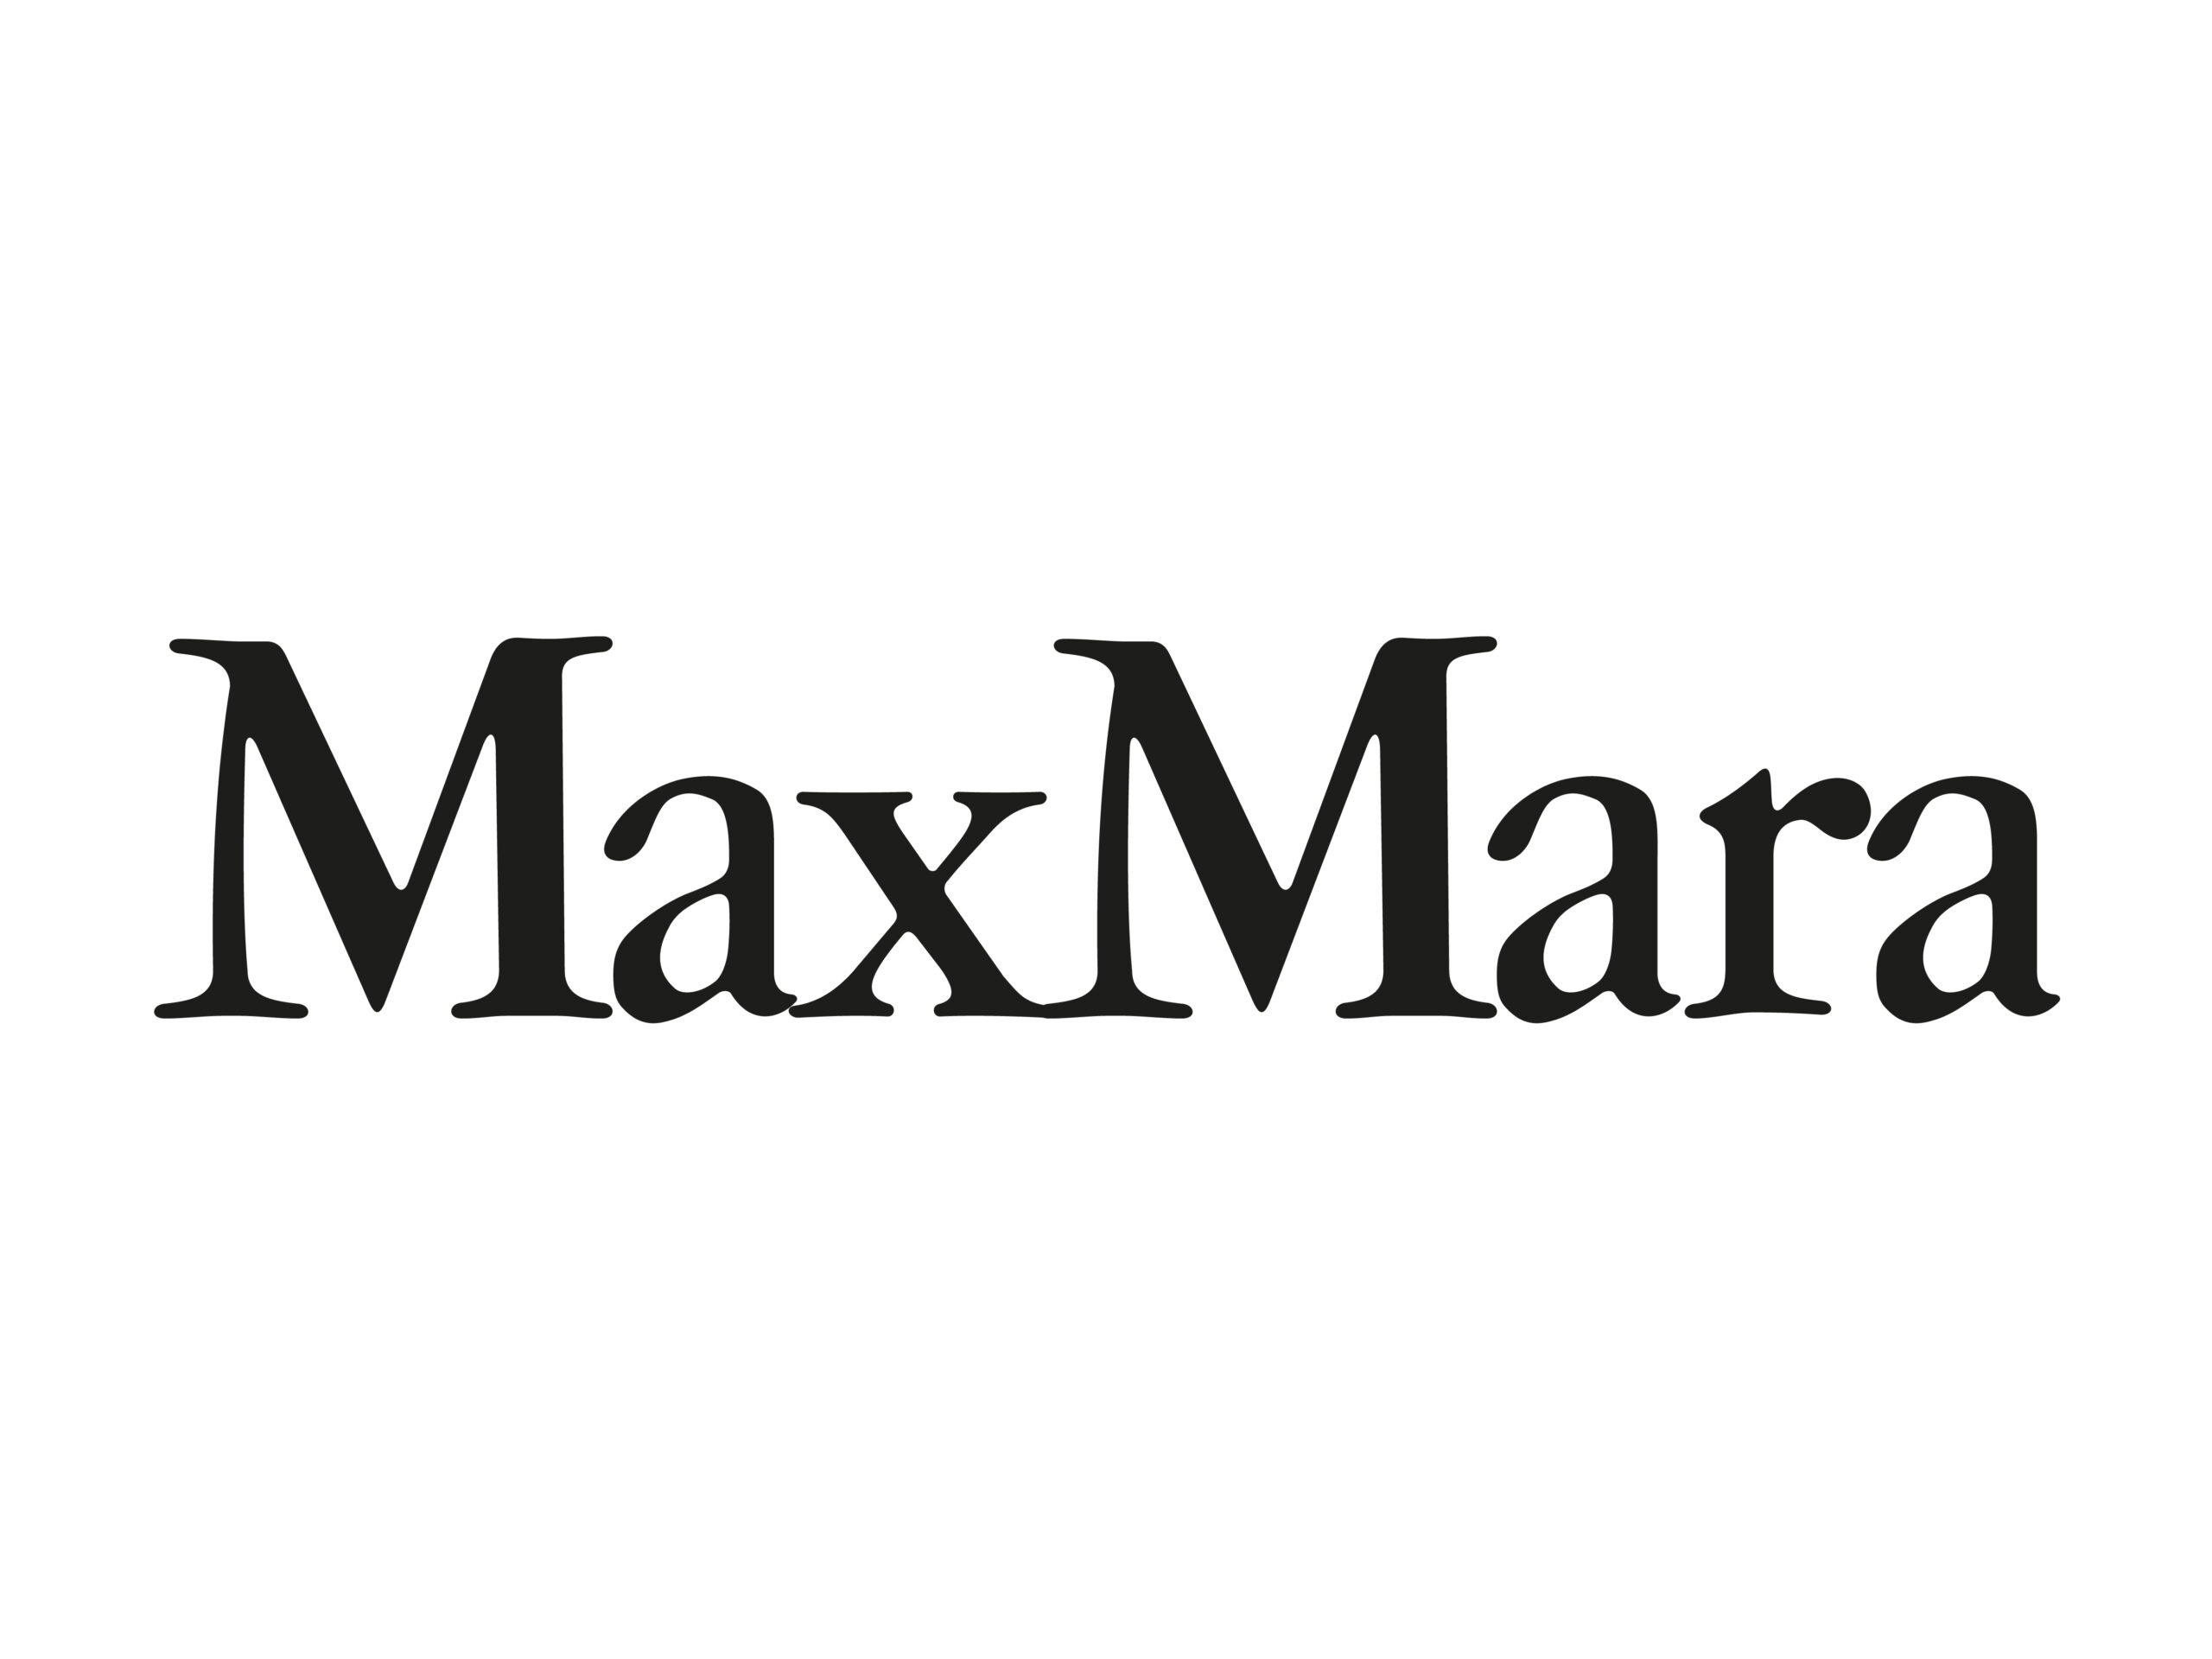 maxmara oprawy radom